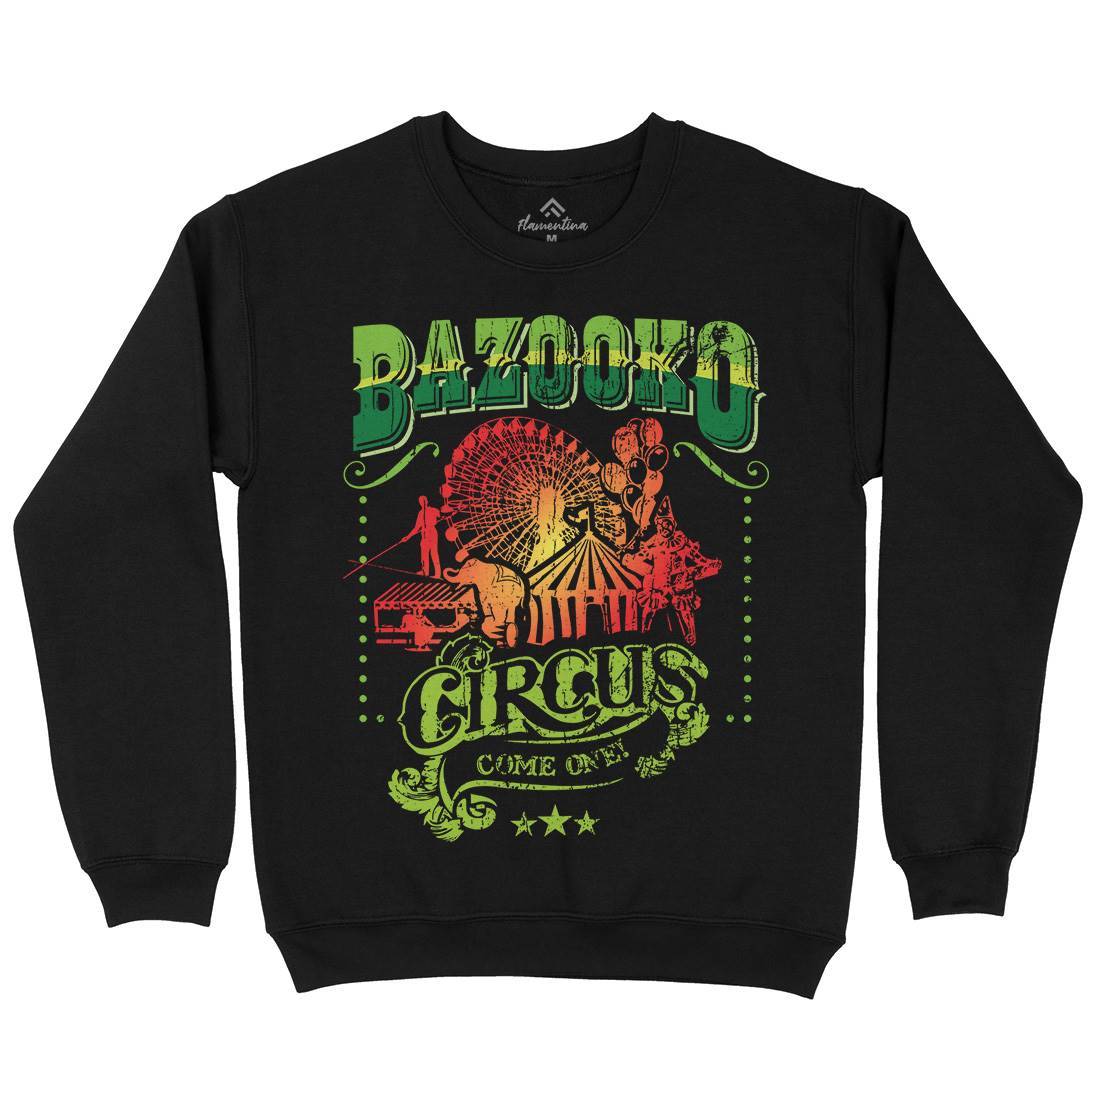 Bazookos Circus Kids Crew Neck Sweatshirt Retro D254